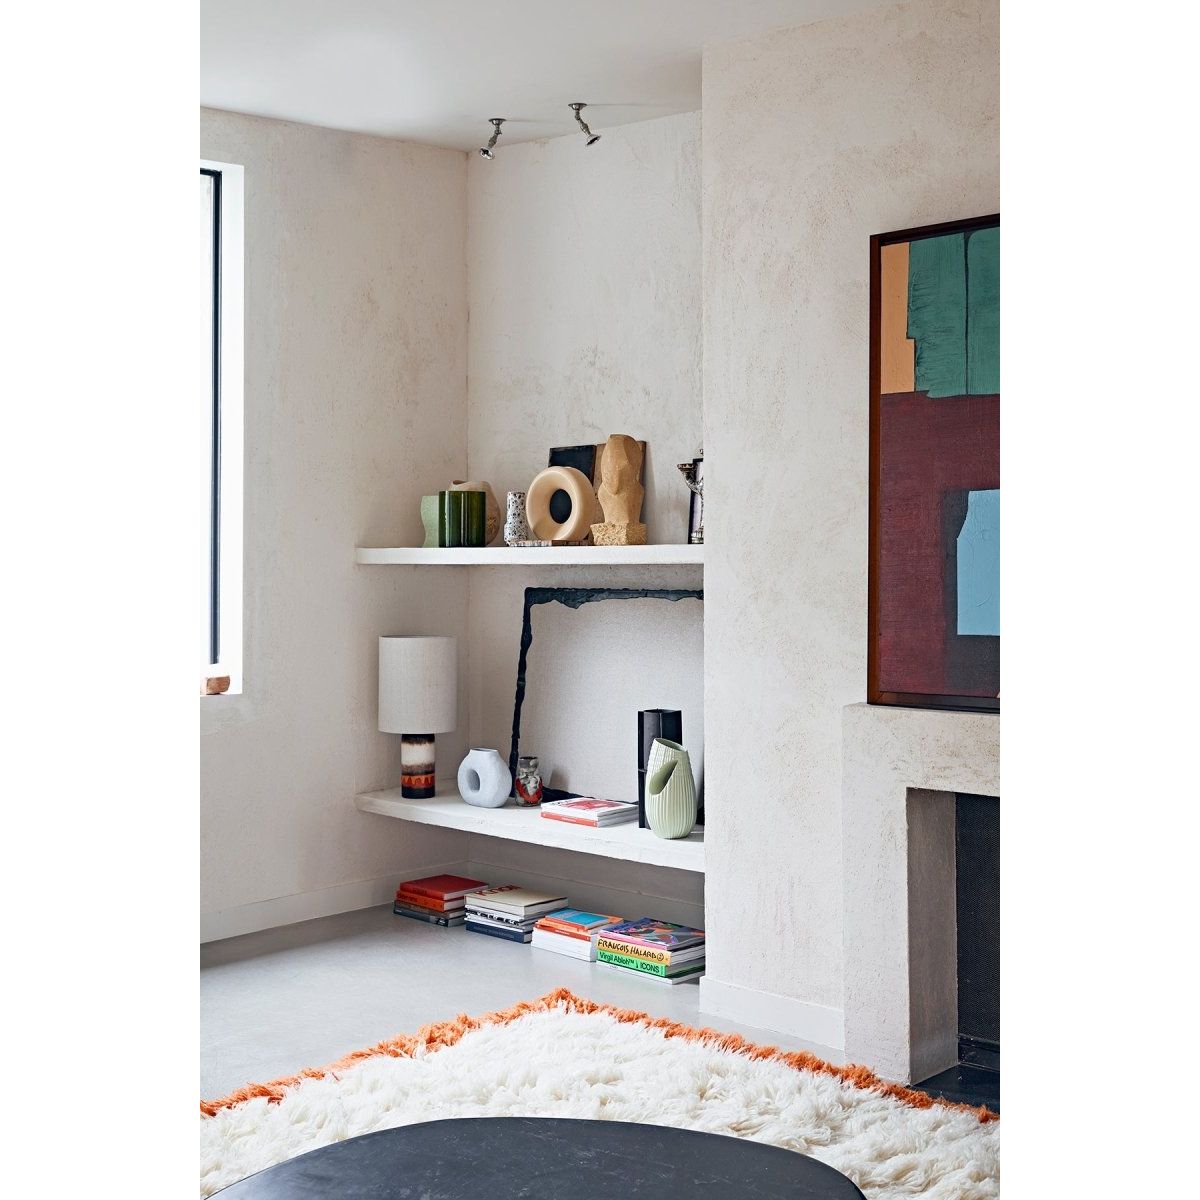 Fluffy square rug, Retro Summers, (250X250cm) - House of Orange